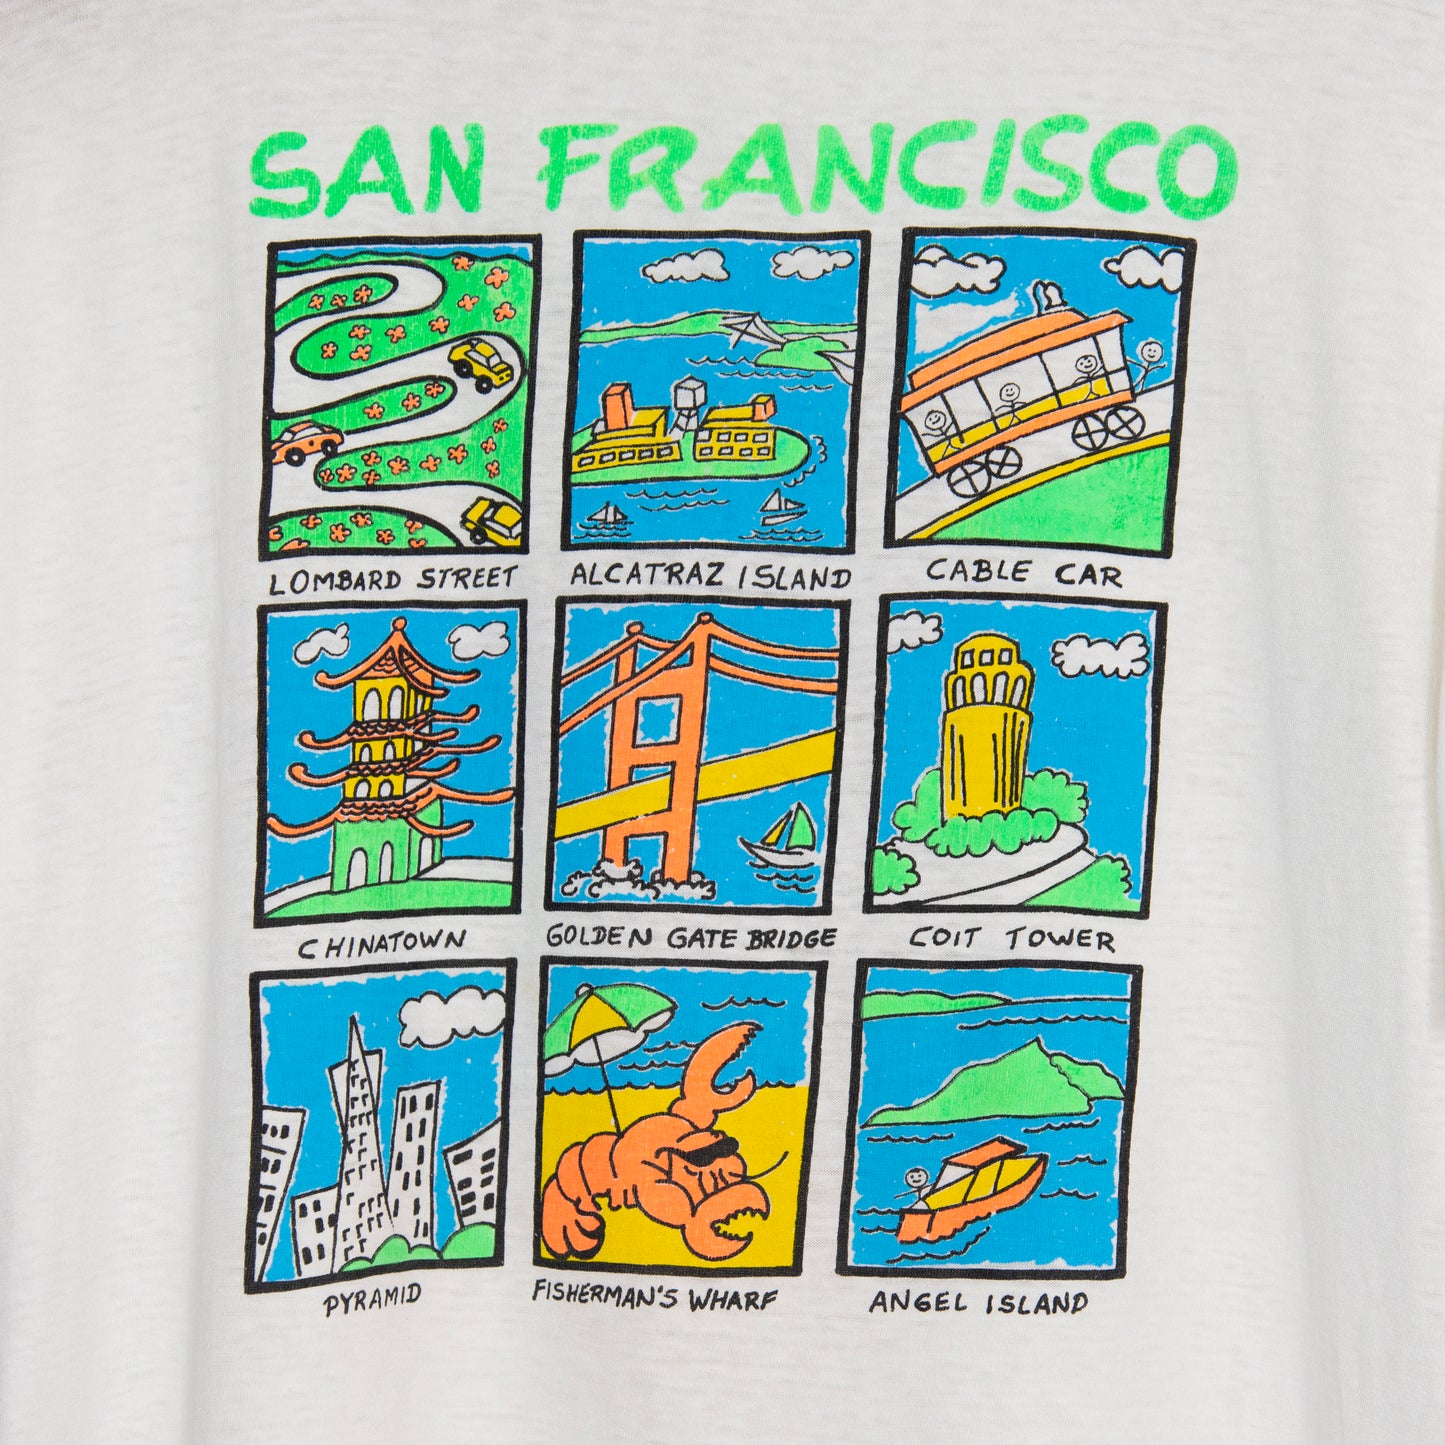 90's San Francisco 'Souvenir' T-Shirt Large